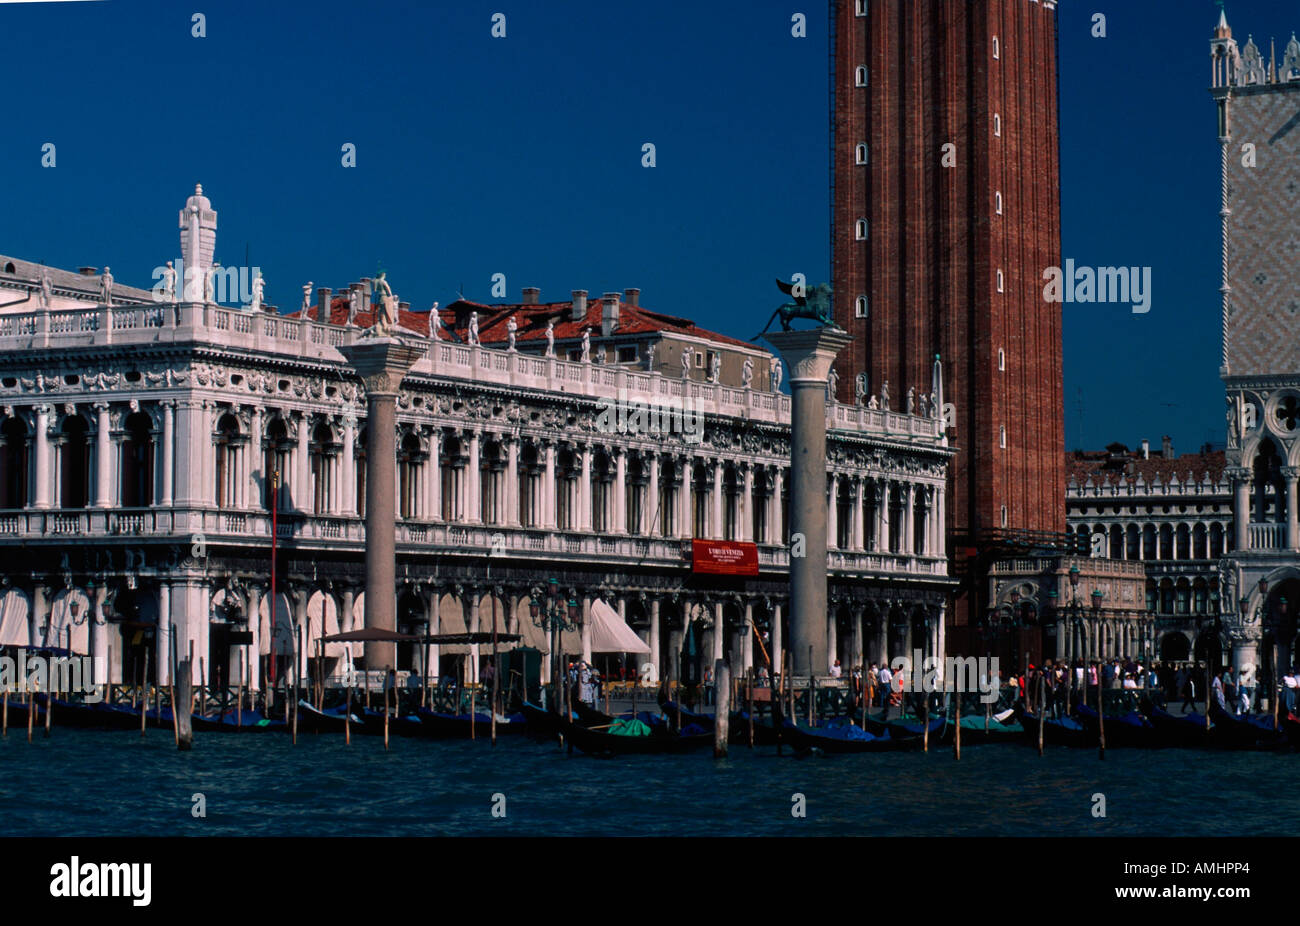 Venedig, Stadtteil San Marco, Bacino San Marco,  Blick auf  Piazzetta, mit Libreria Veccia / Biblioteca Nazionale Marciana und G Stock Photo